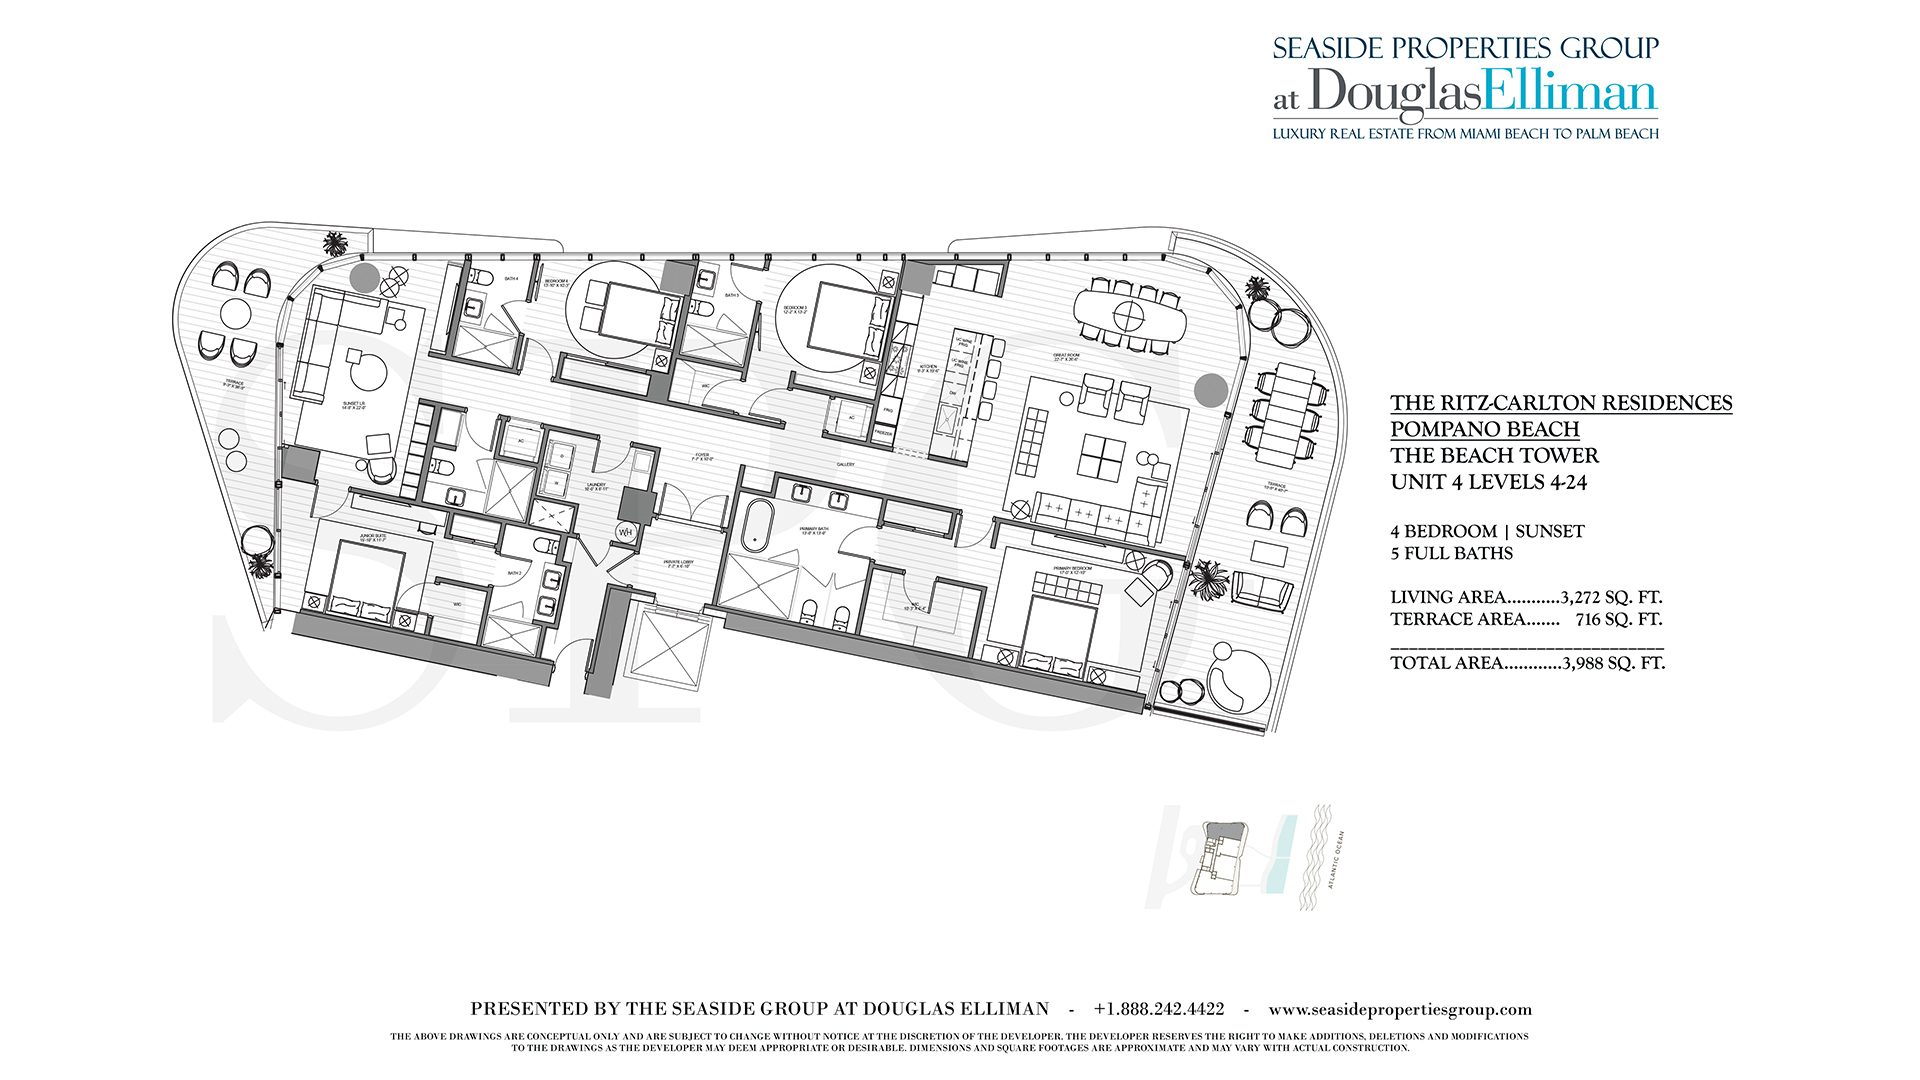 Floorplan for Unit 4 Levels 4-24